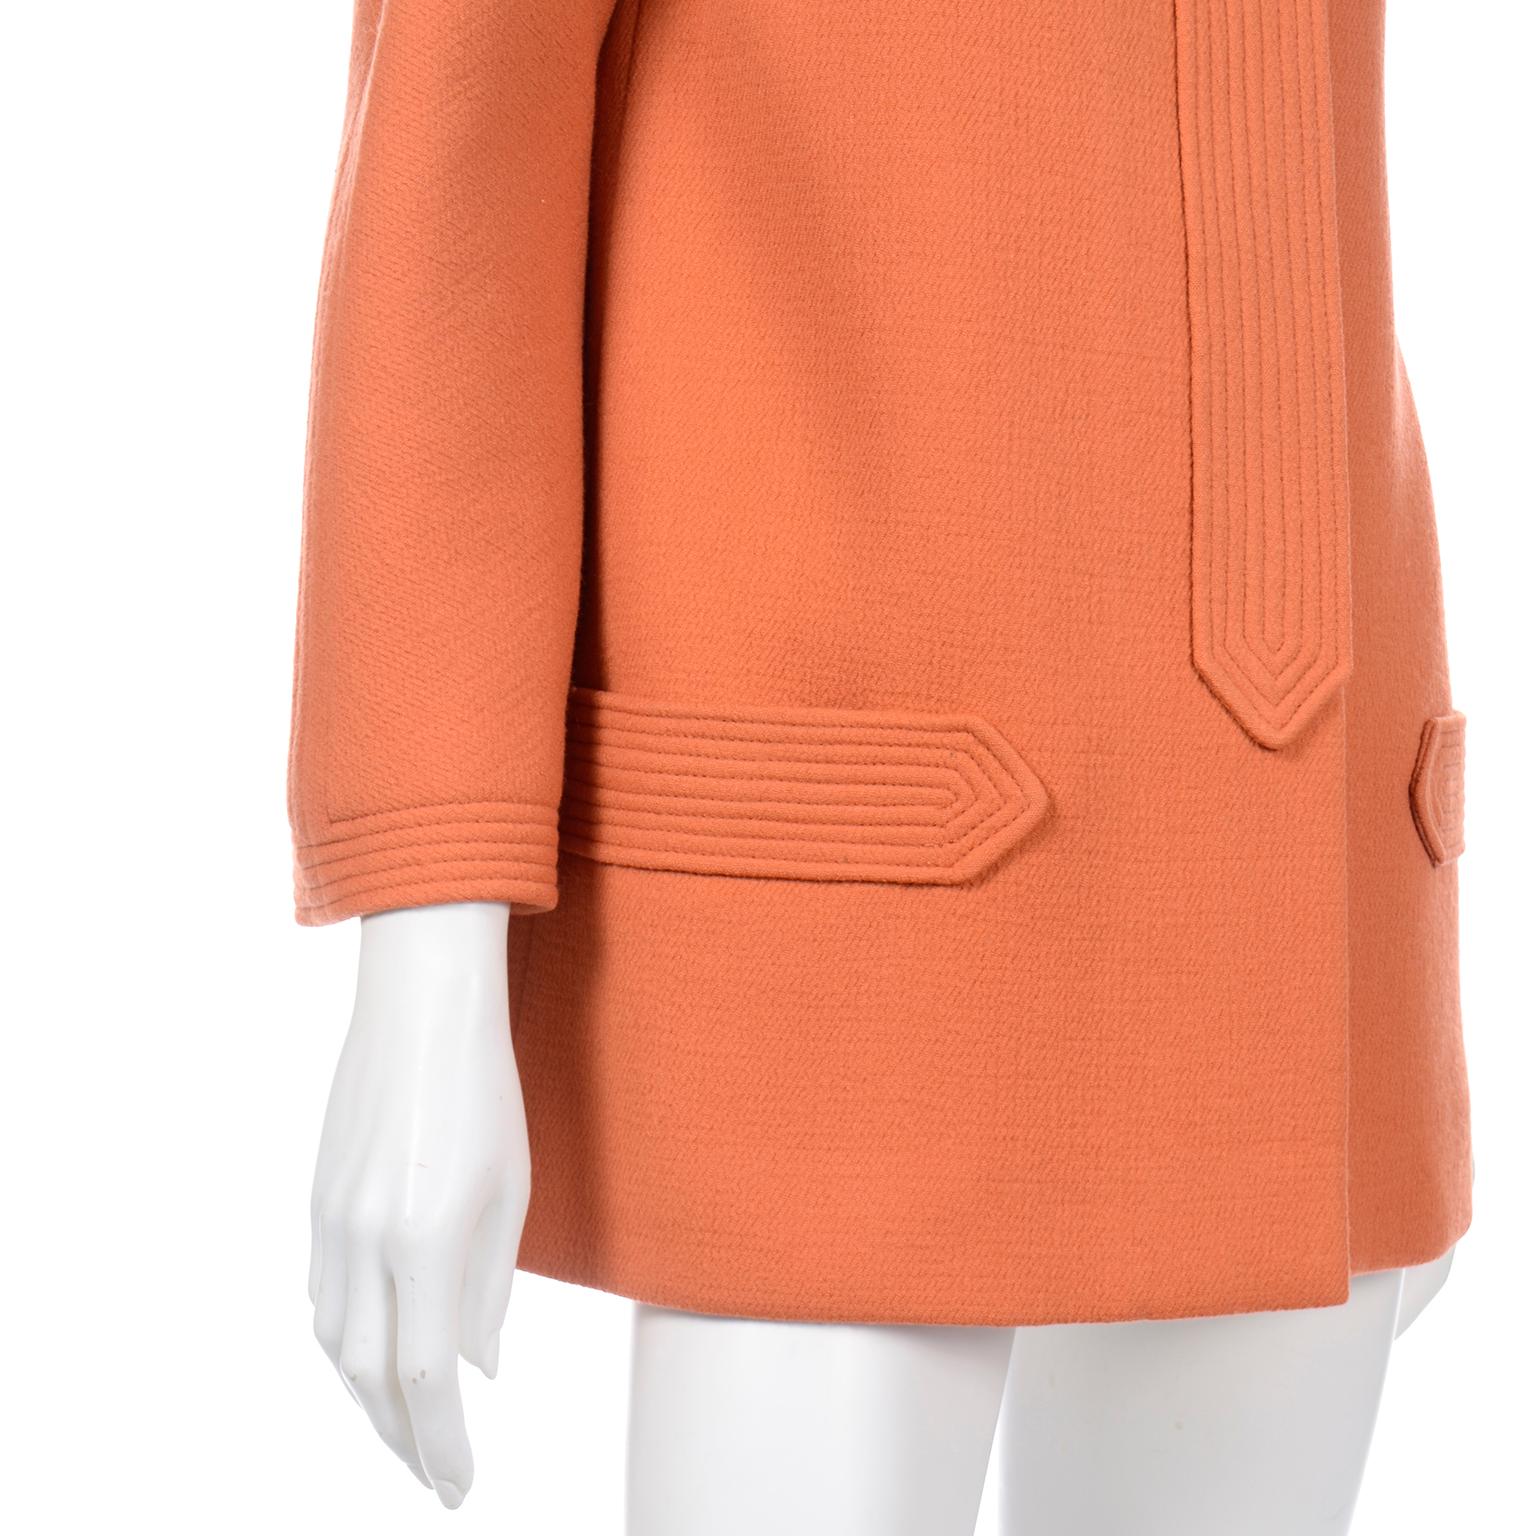 Pierre Cardin Vintage Orange Wool Jacket or Short Coat Late 1960s Early 1970s For Sale 2